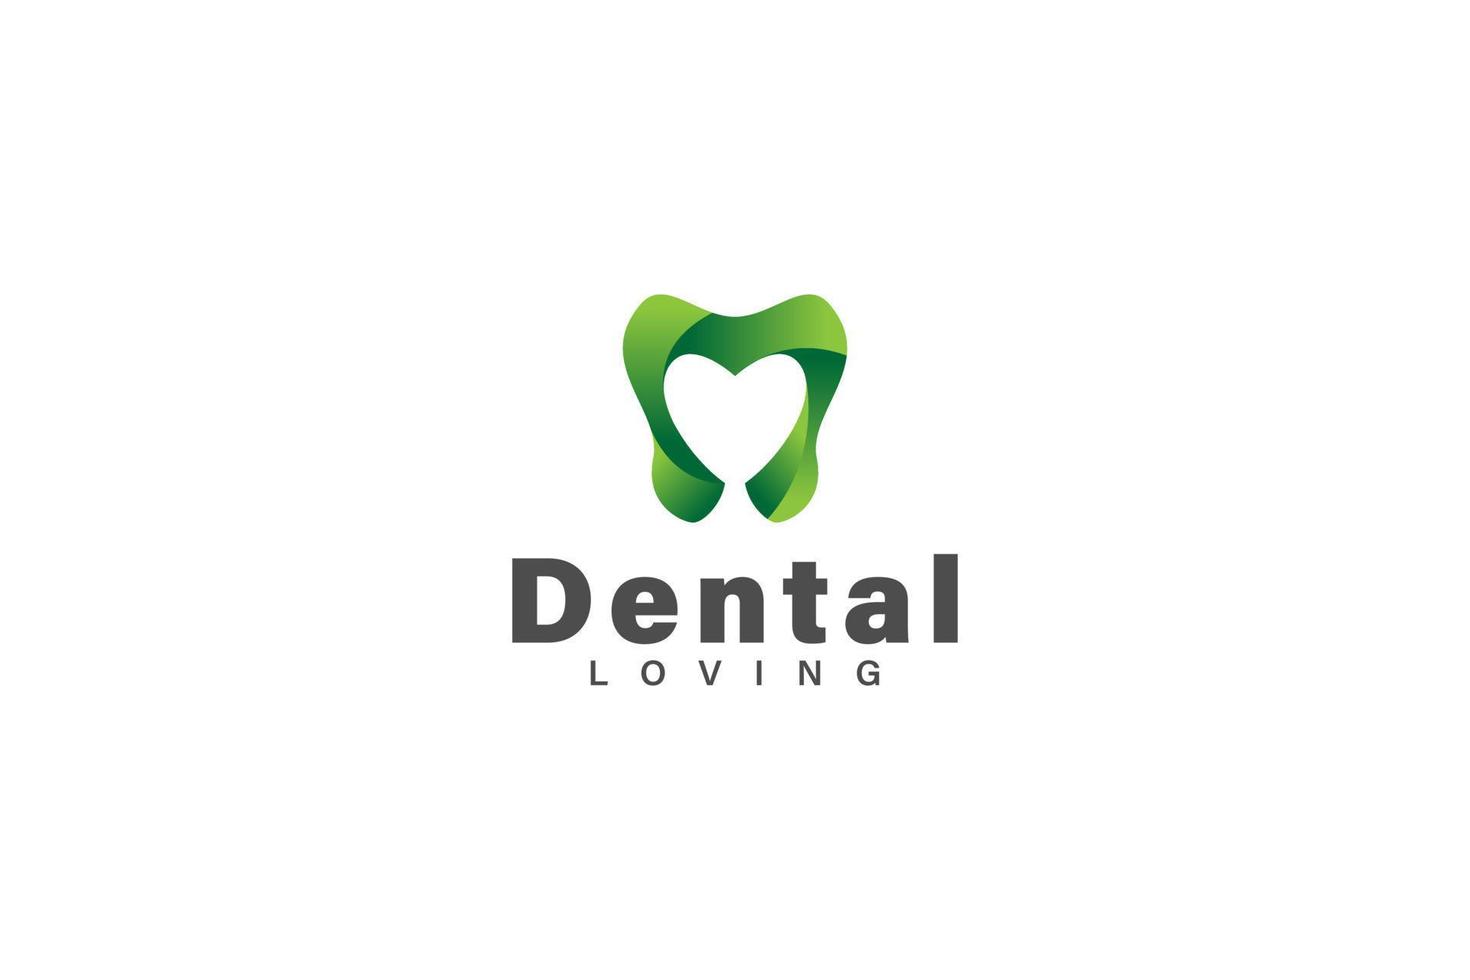 Dental loving or dental care logo design vector